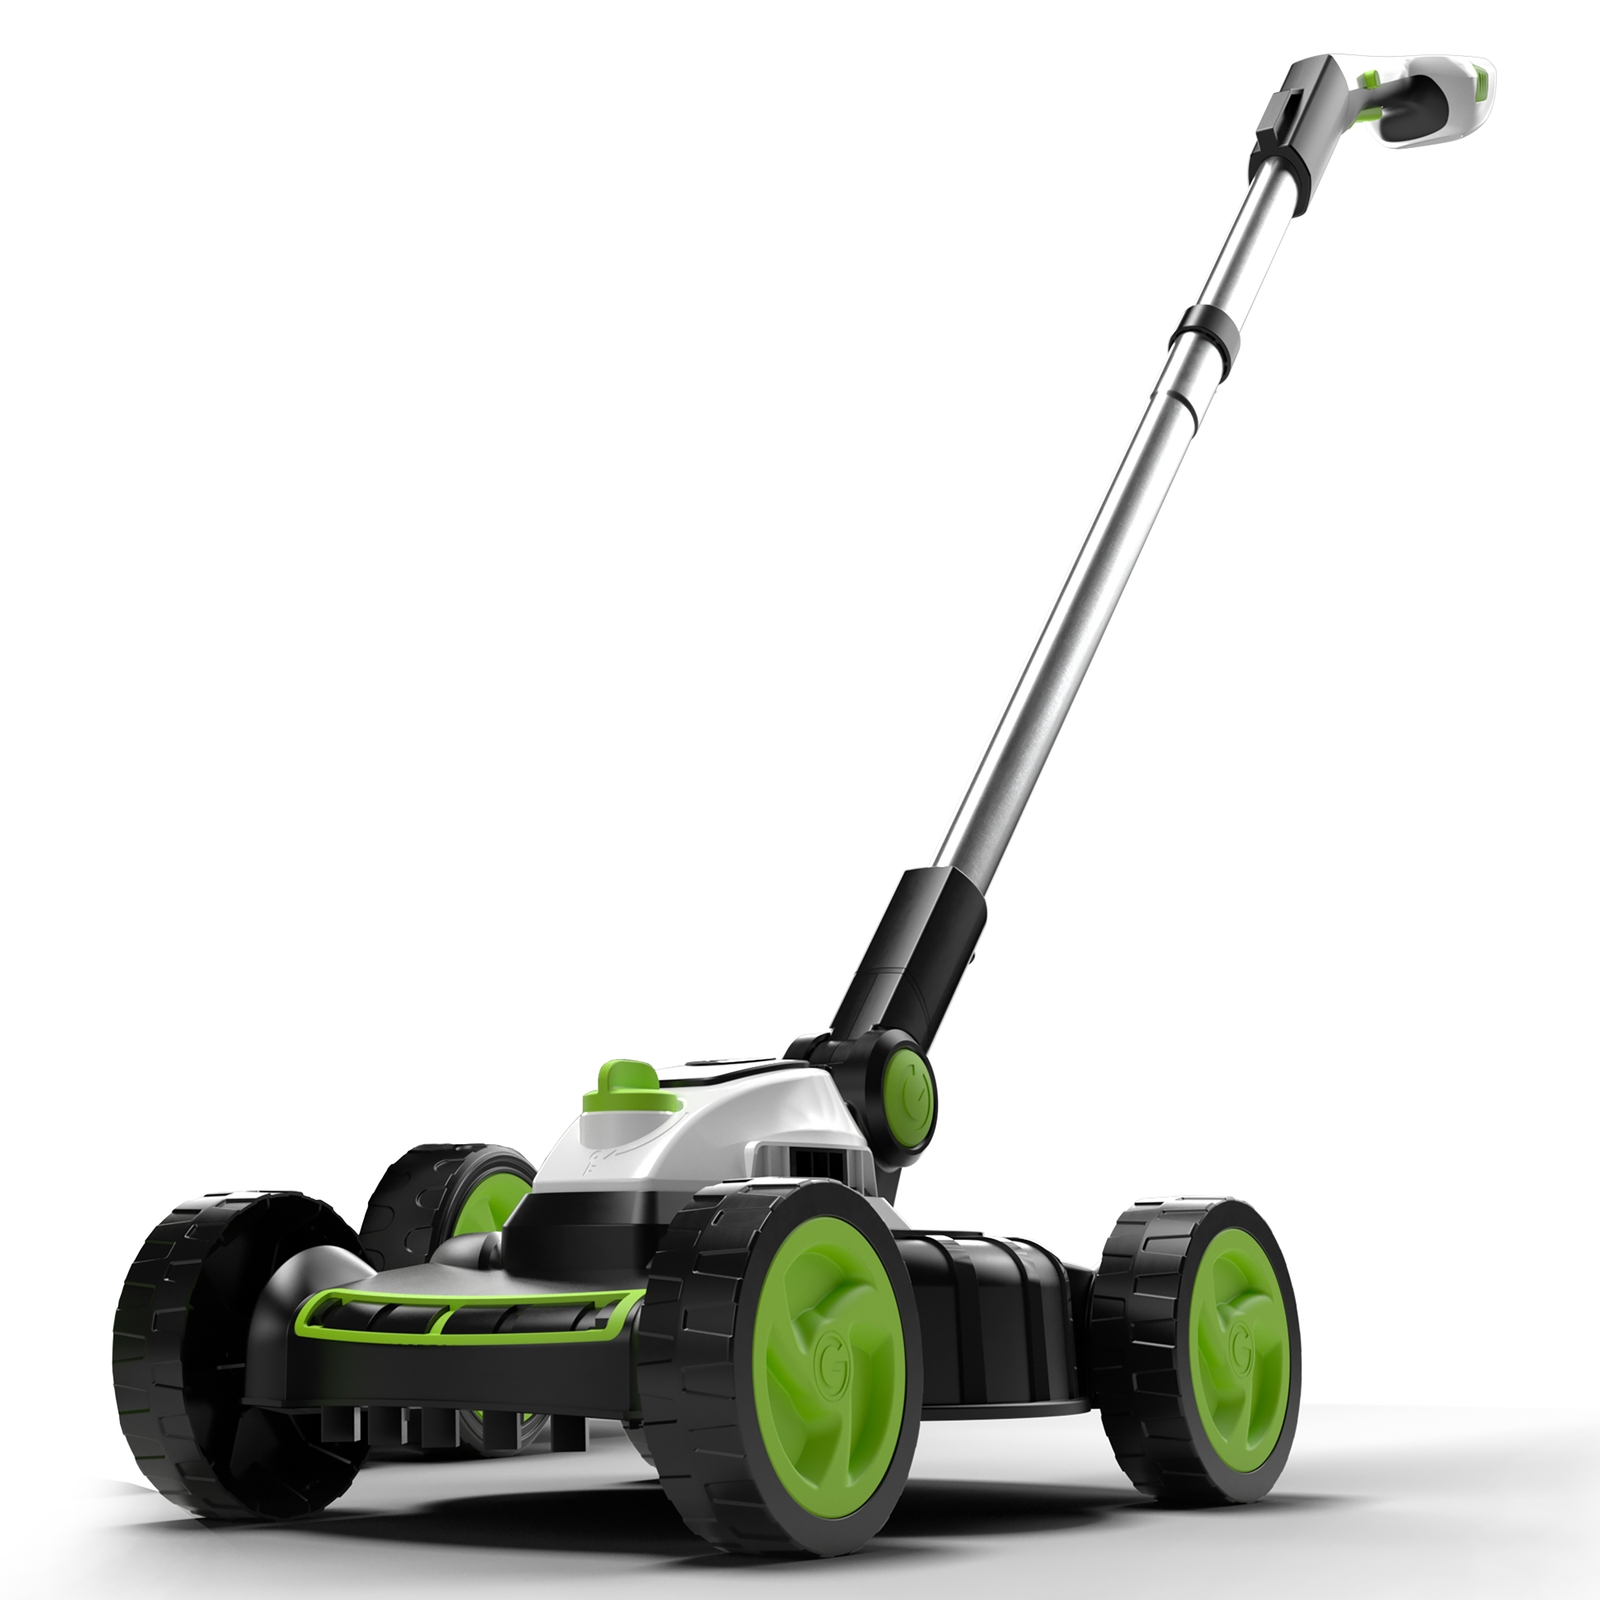 Gtech Small Cordless Lawnmower SLM50